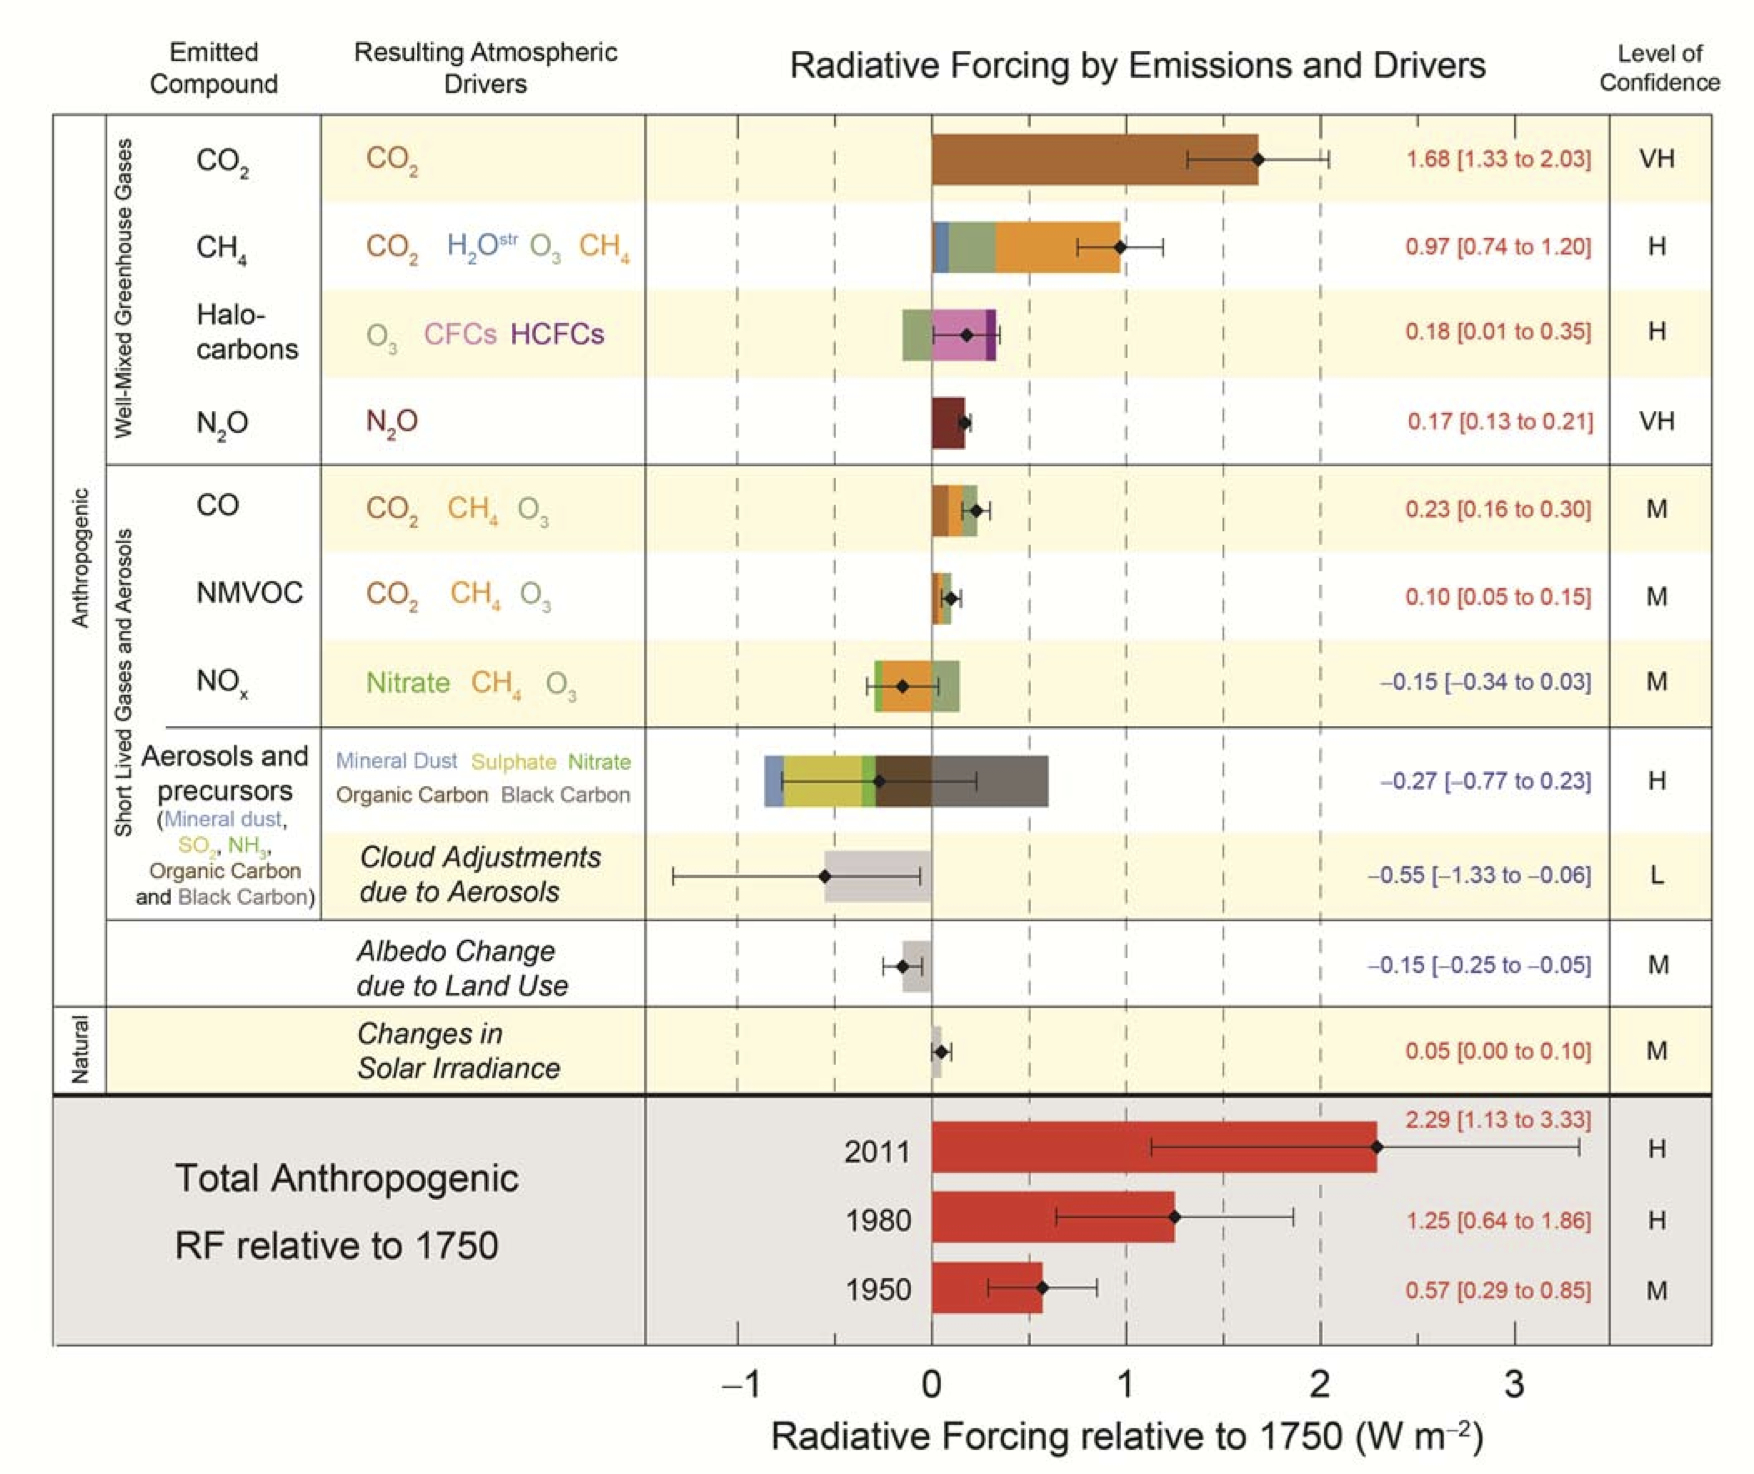 IPCC AR5 radiative forcings